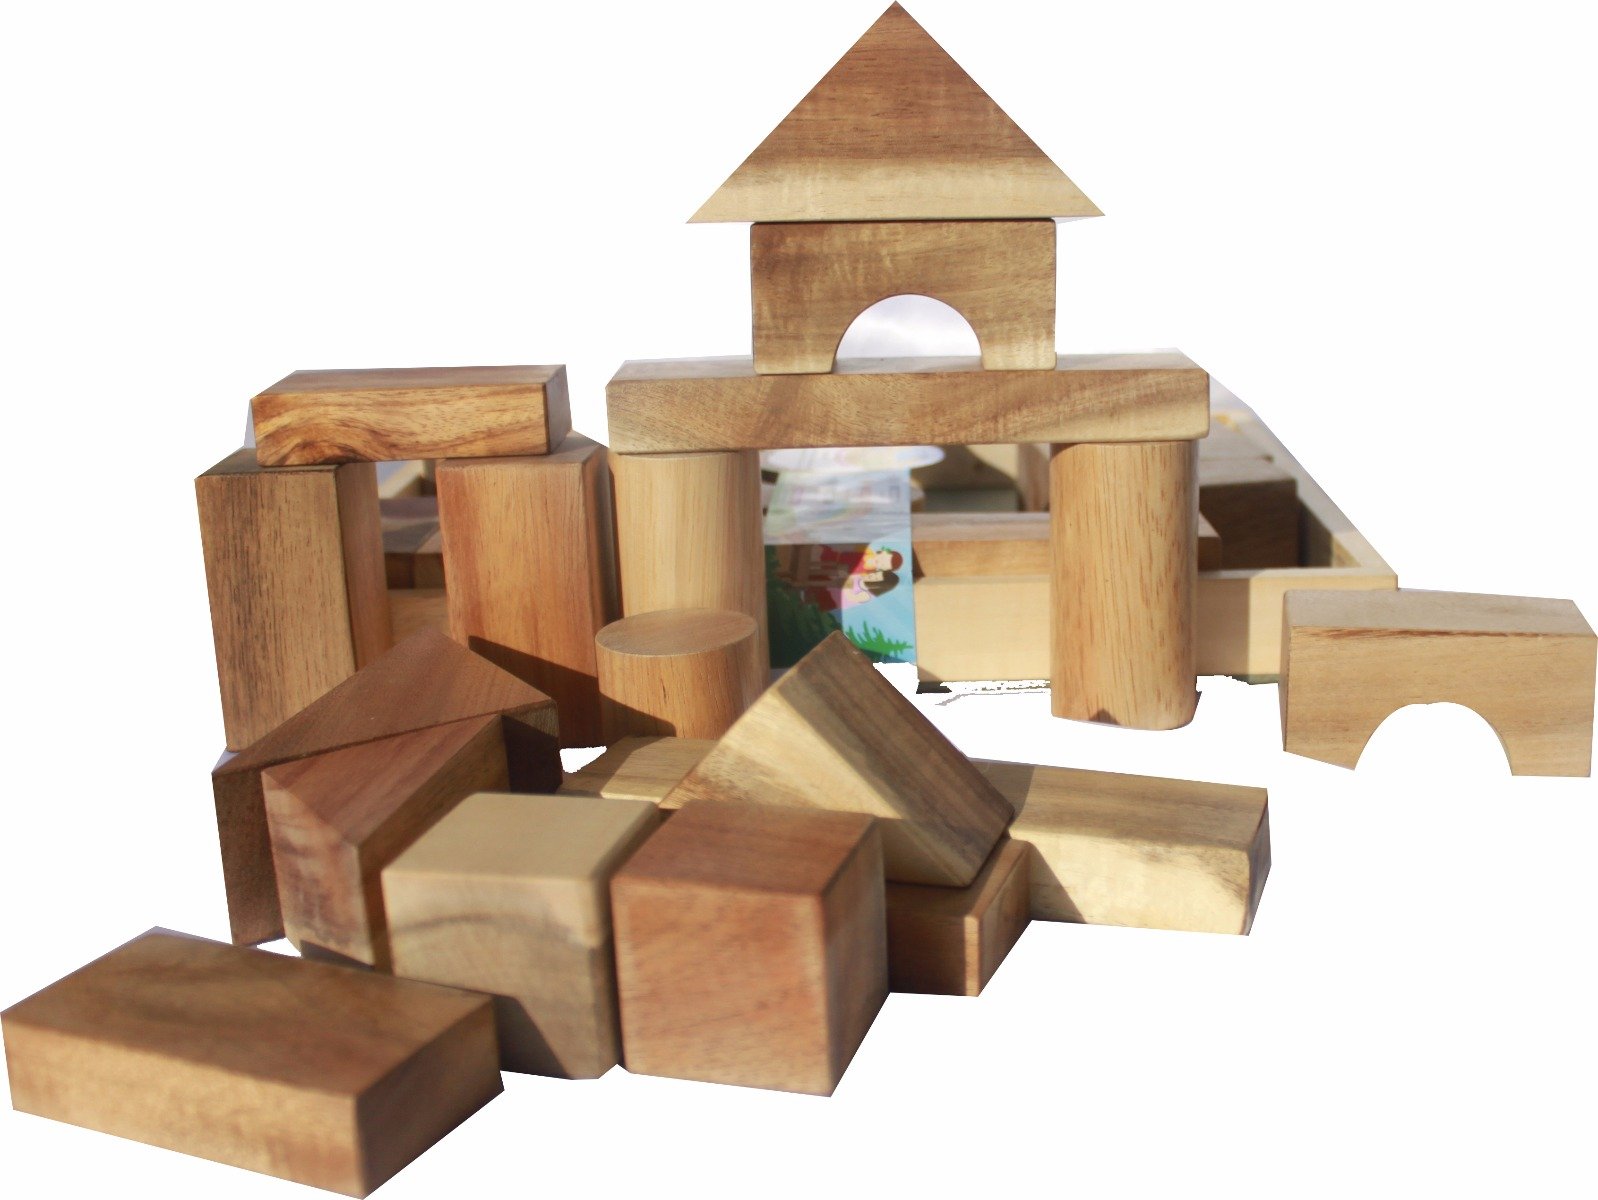 Toys Natural Wood Blocks 34 Pcs